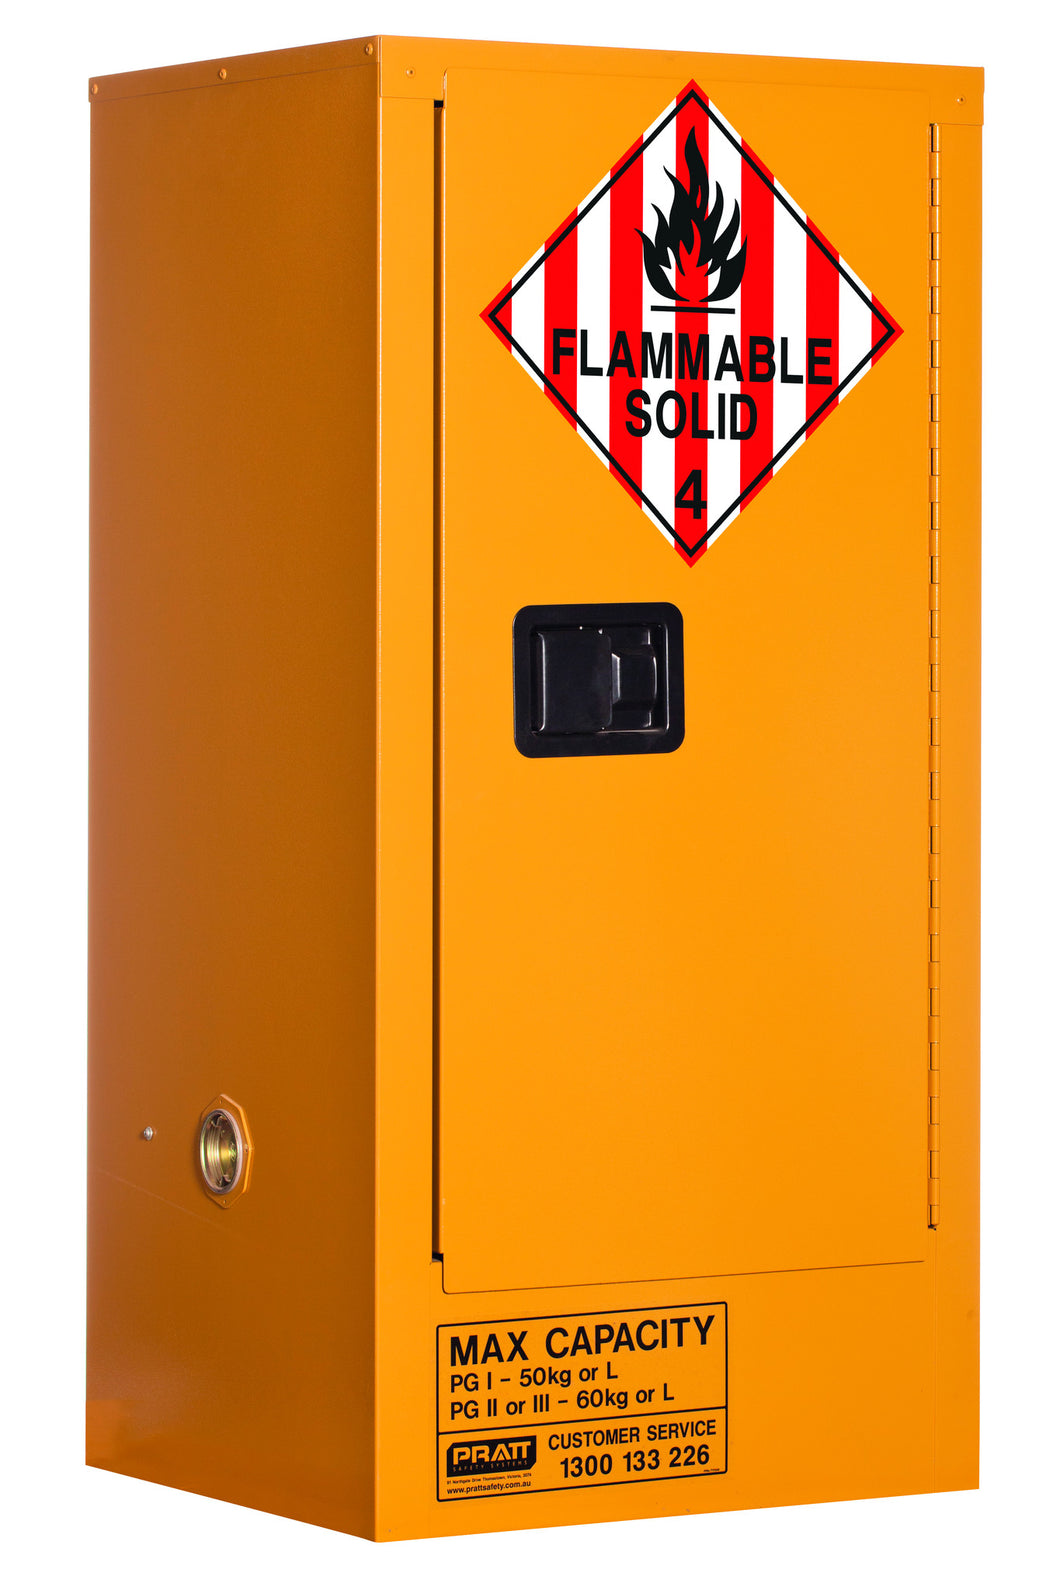 60L Class 4 Hazardous Goods Storage Cabinet 2 Shelf, Class 4 Cabinets - DG Safety